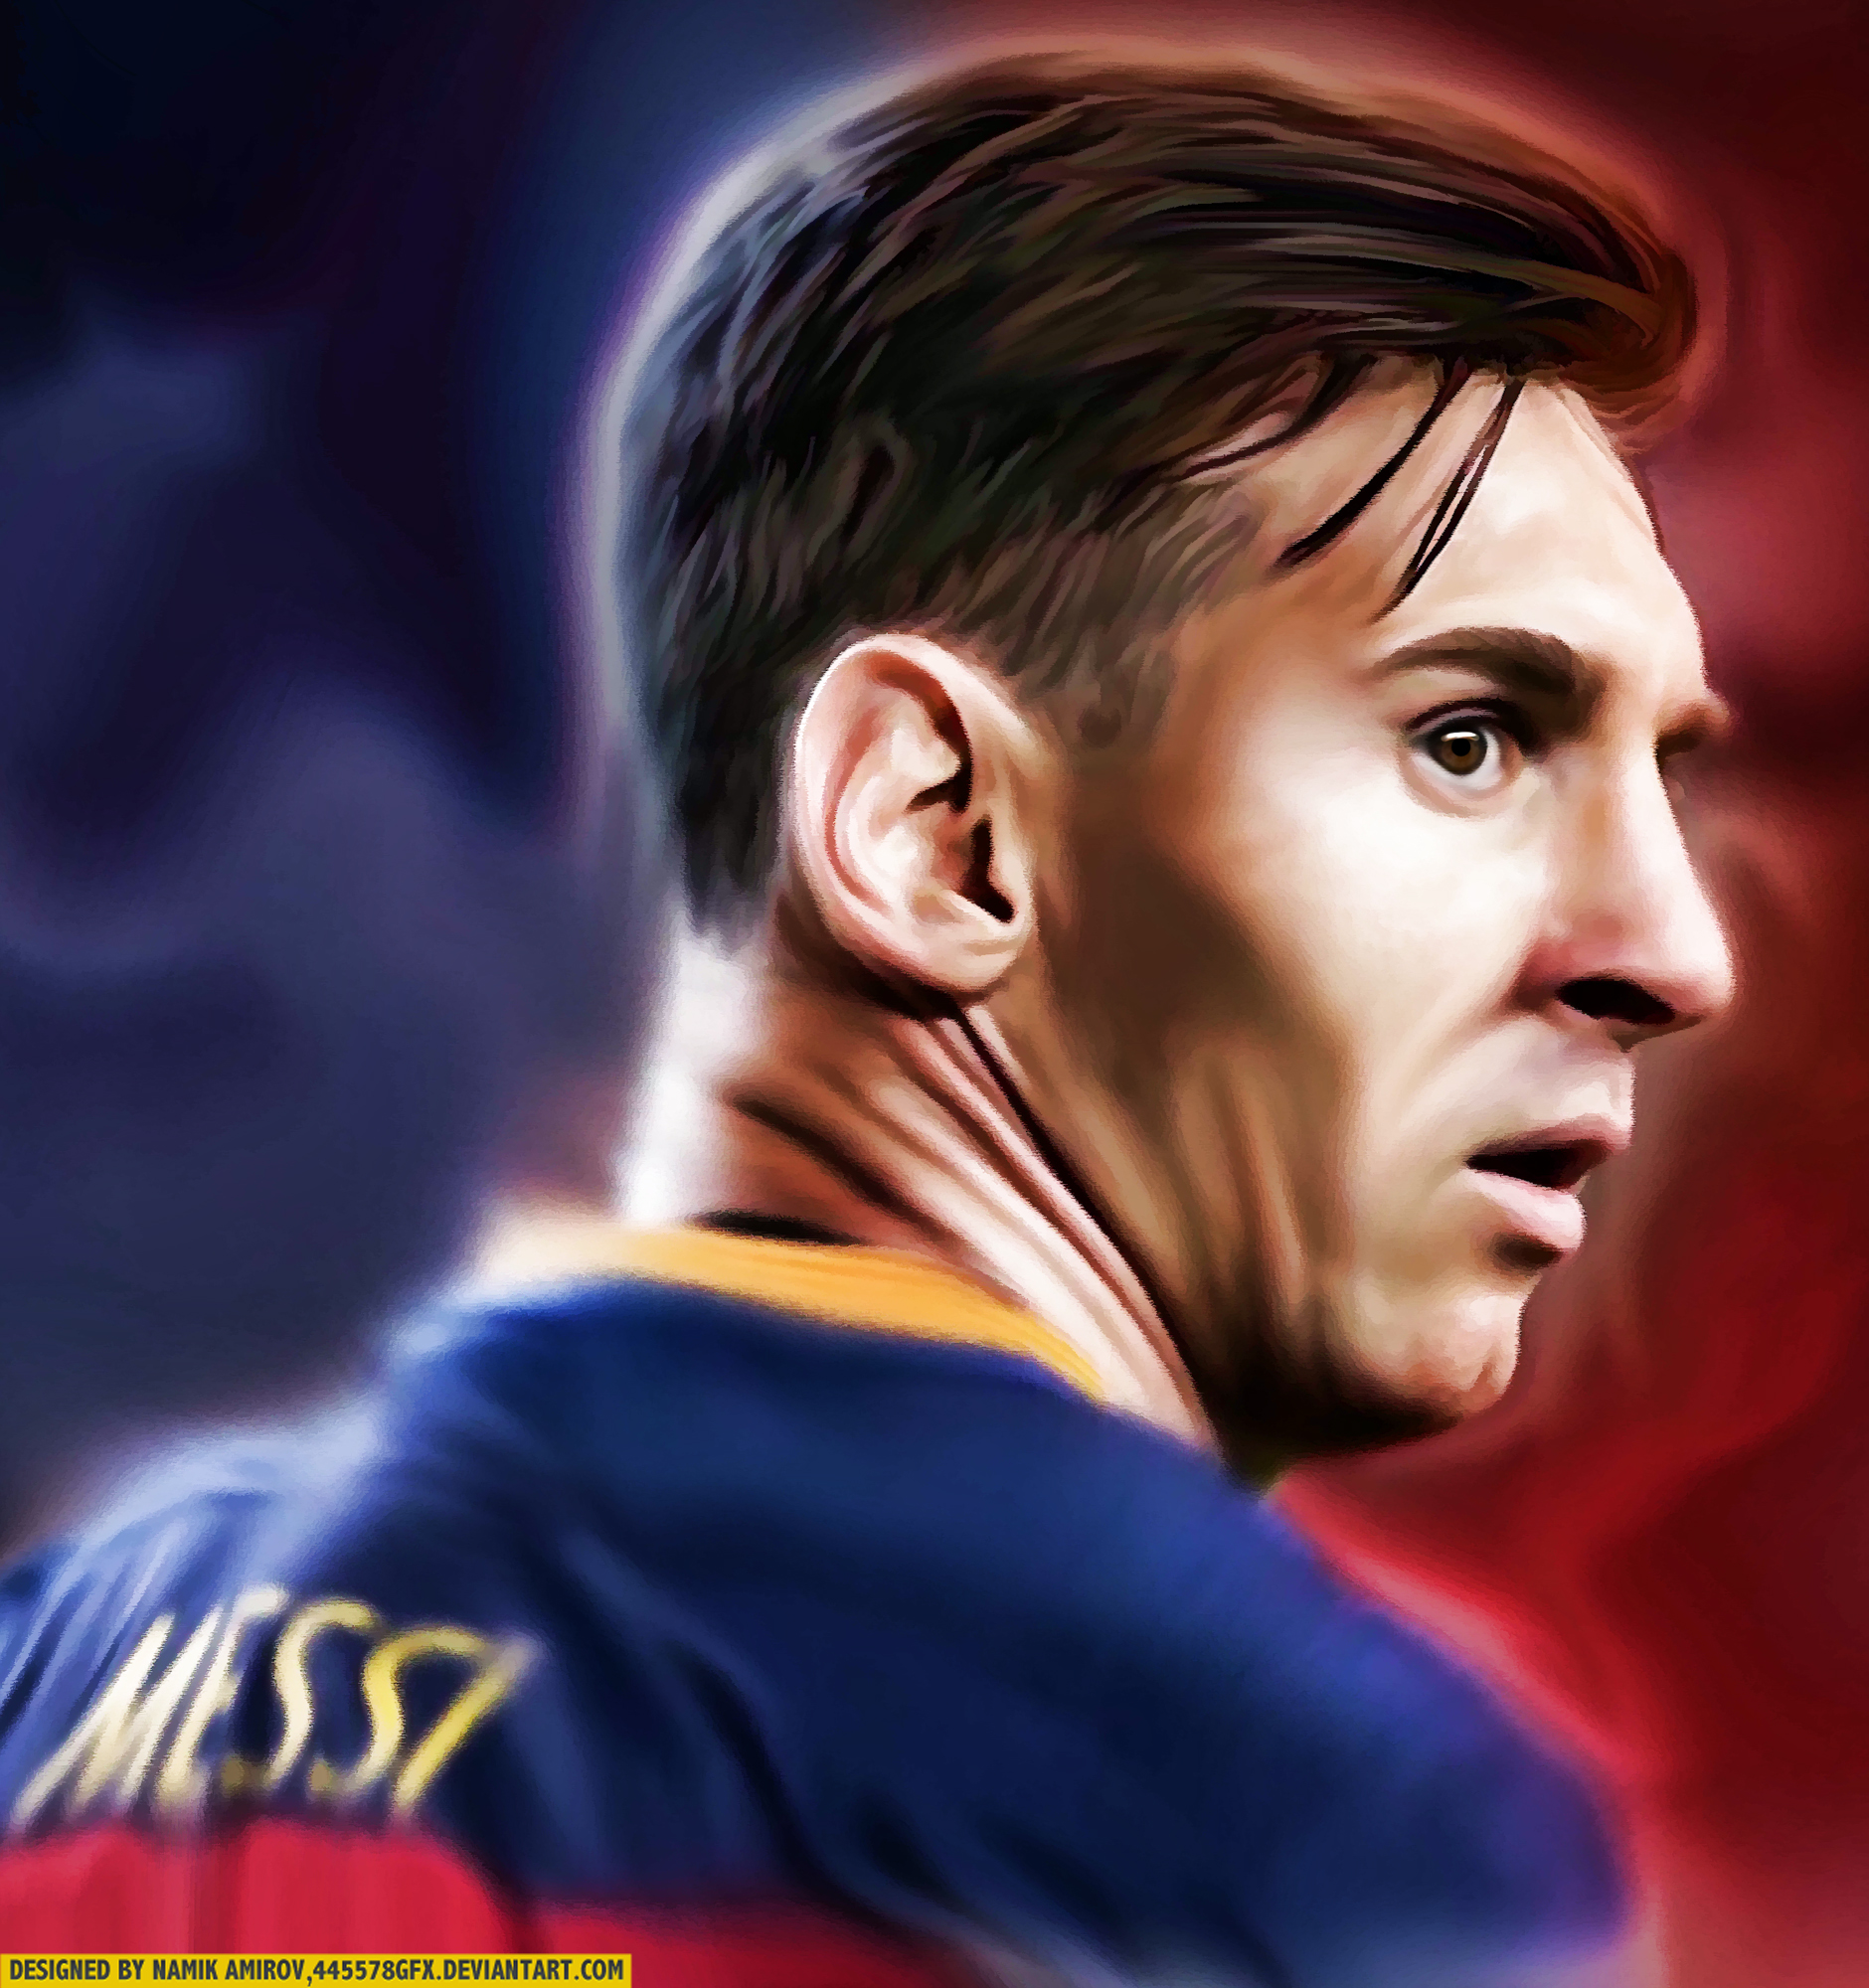 Lionel Messi Picture by Namik Amirov